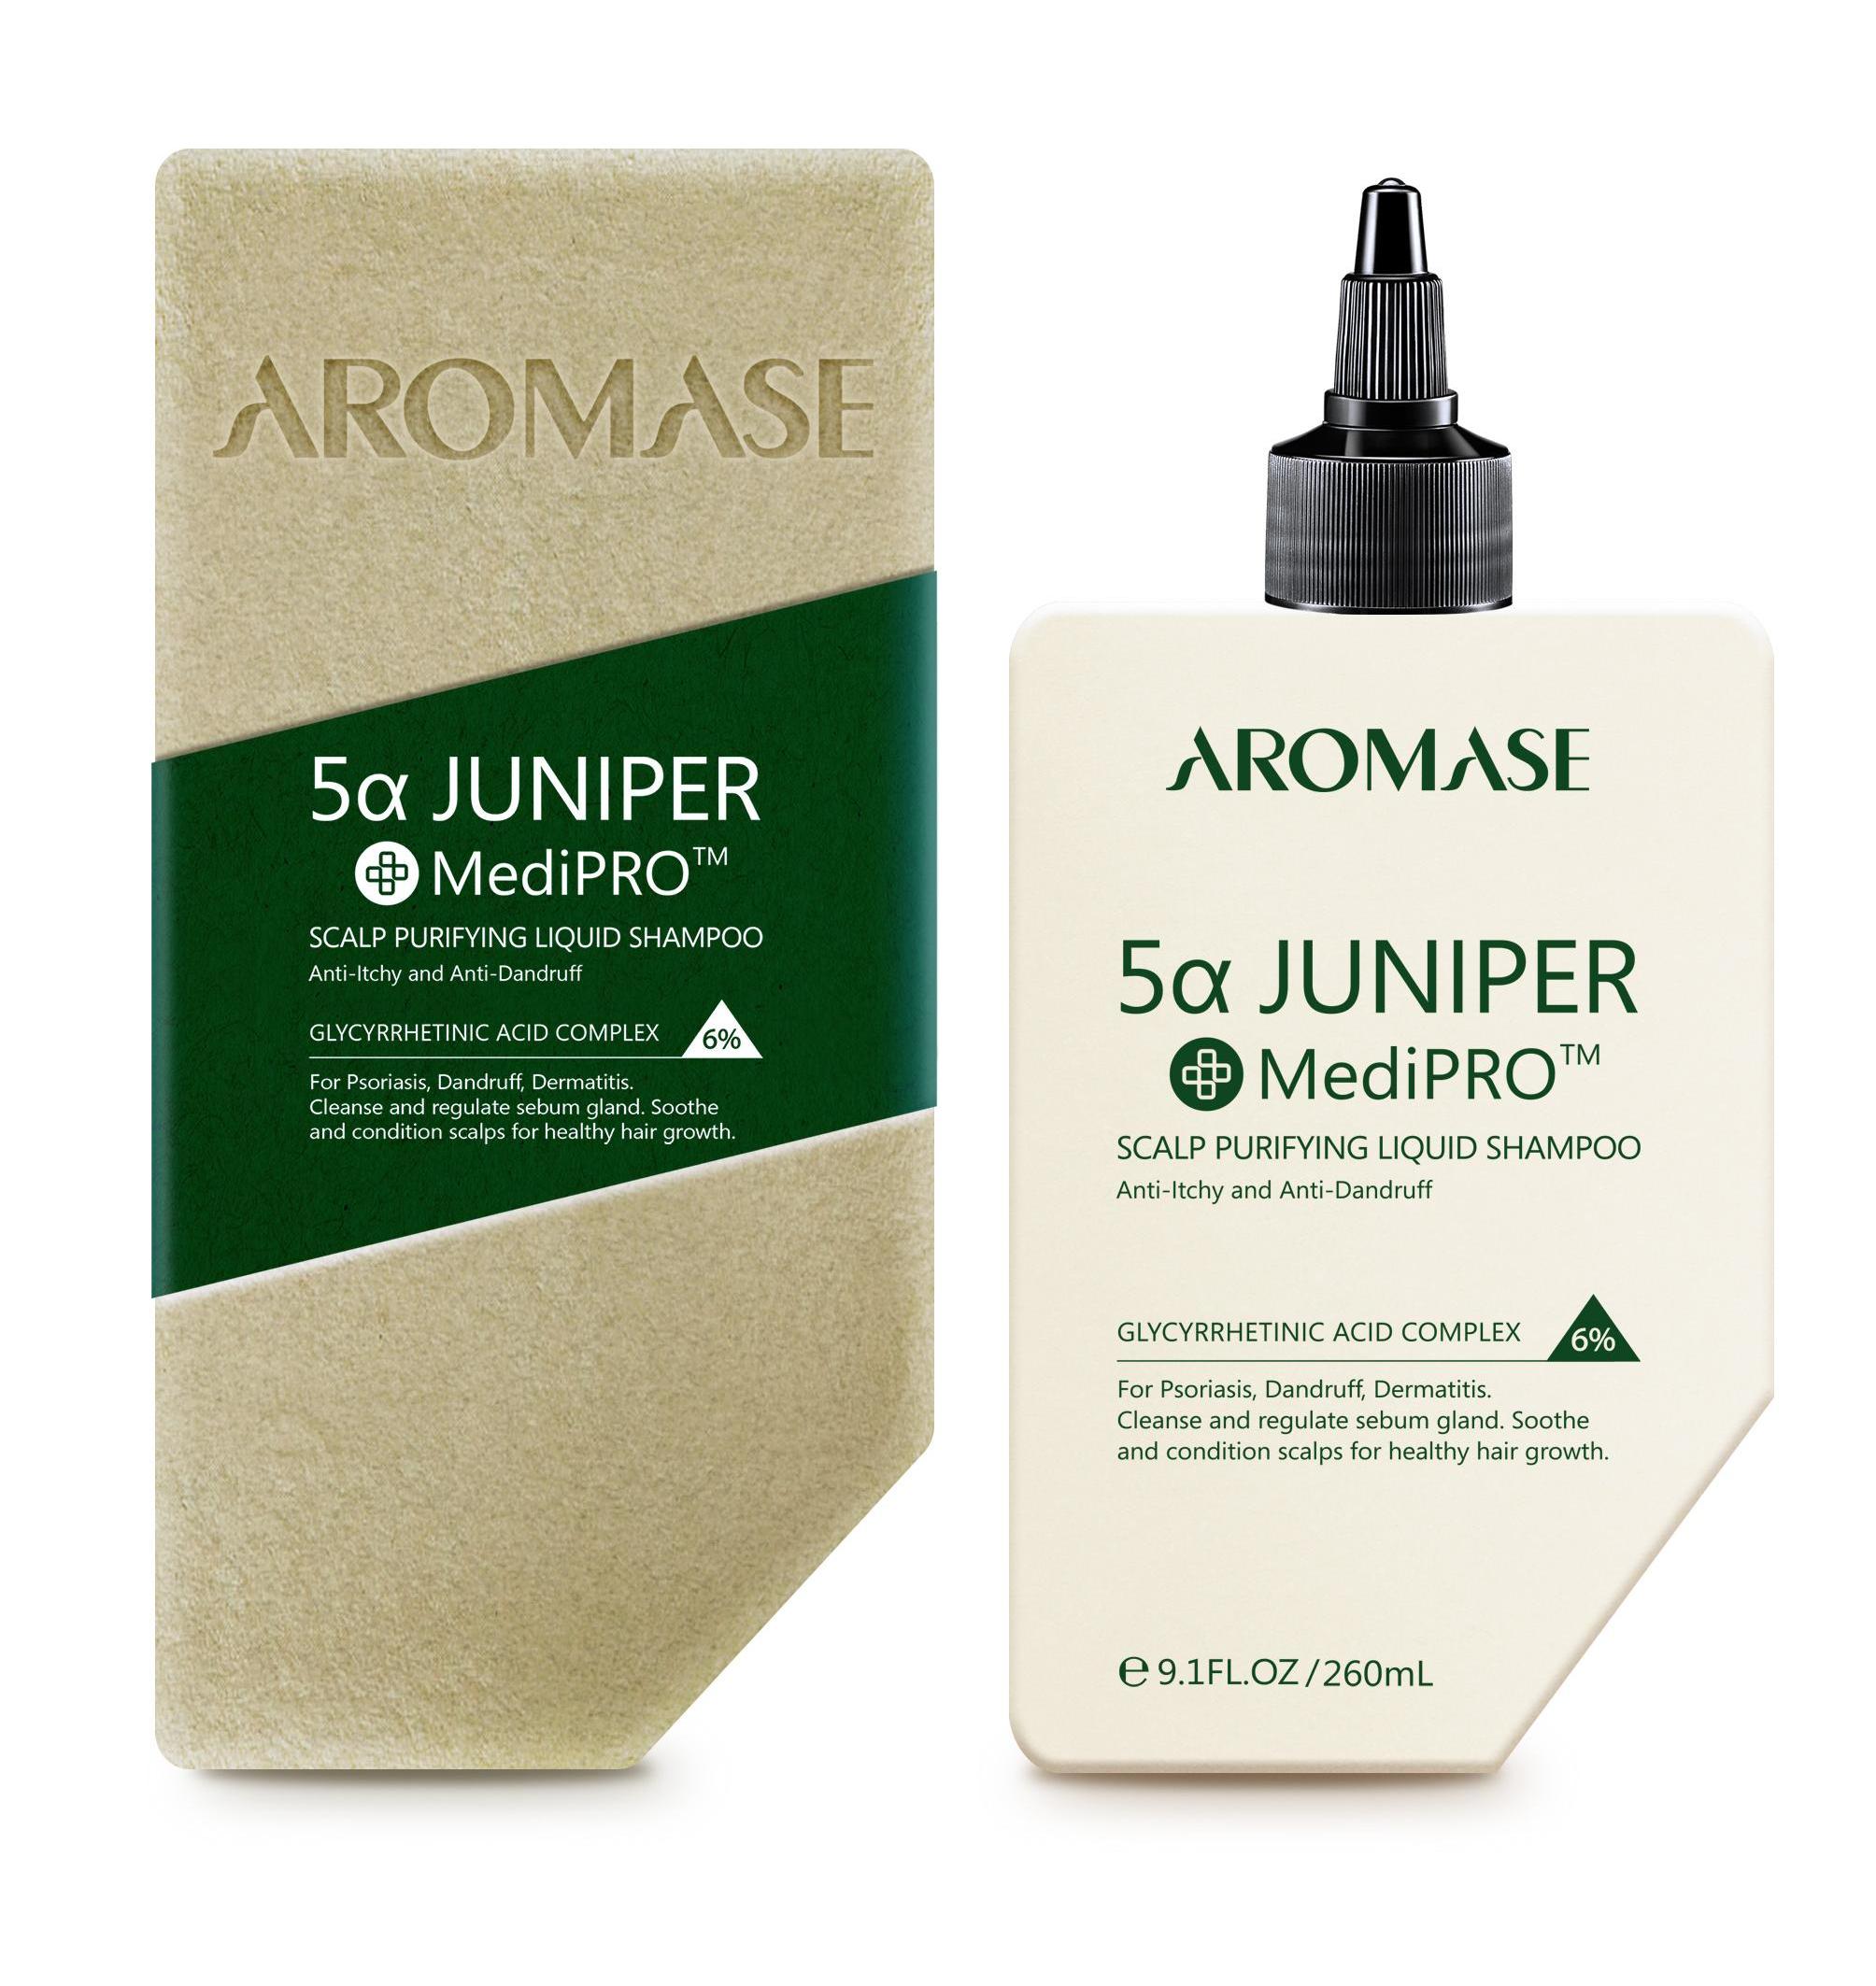  MediPRO™ 5α Juniper Scalp Purifying Liquid Shampoo-MacroHI co., Ltd